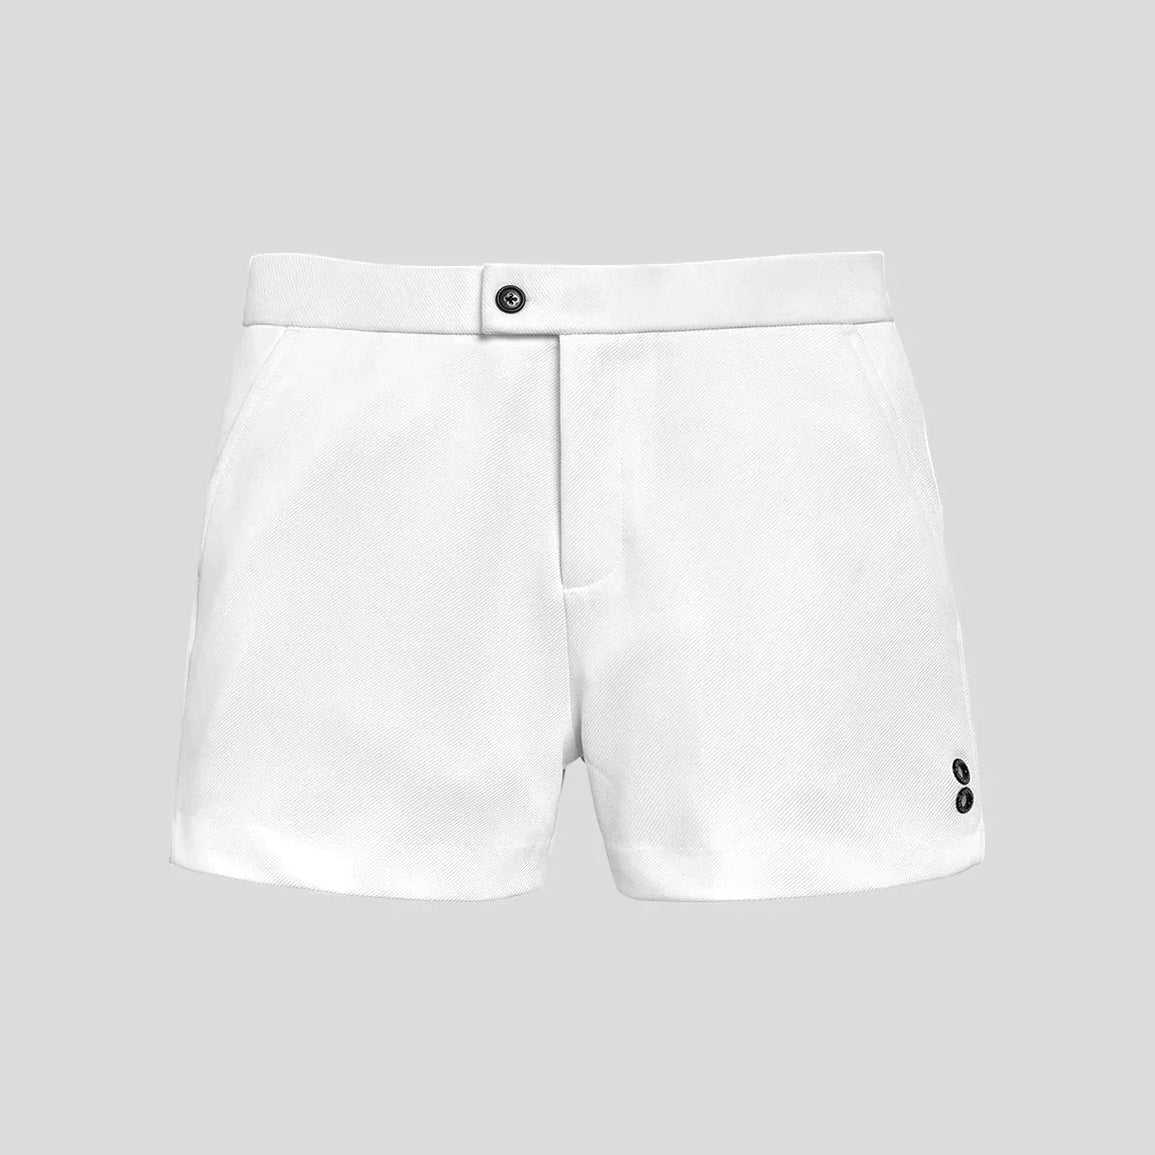 Tennis Shorts Blanco. Ron Dorff